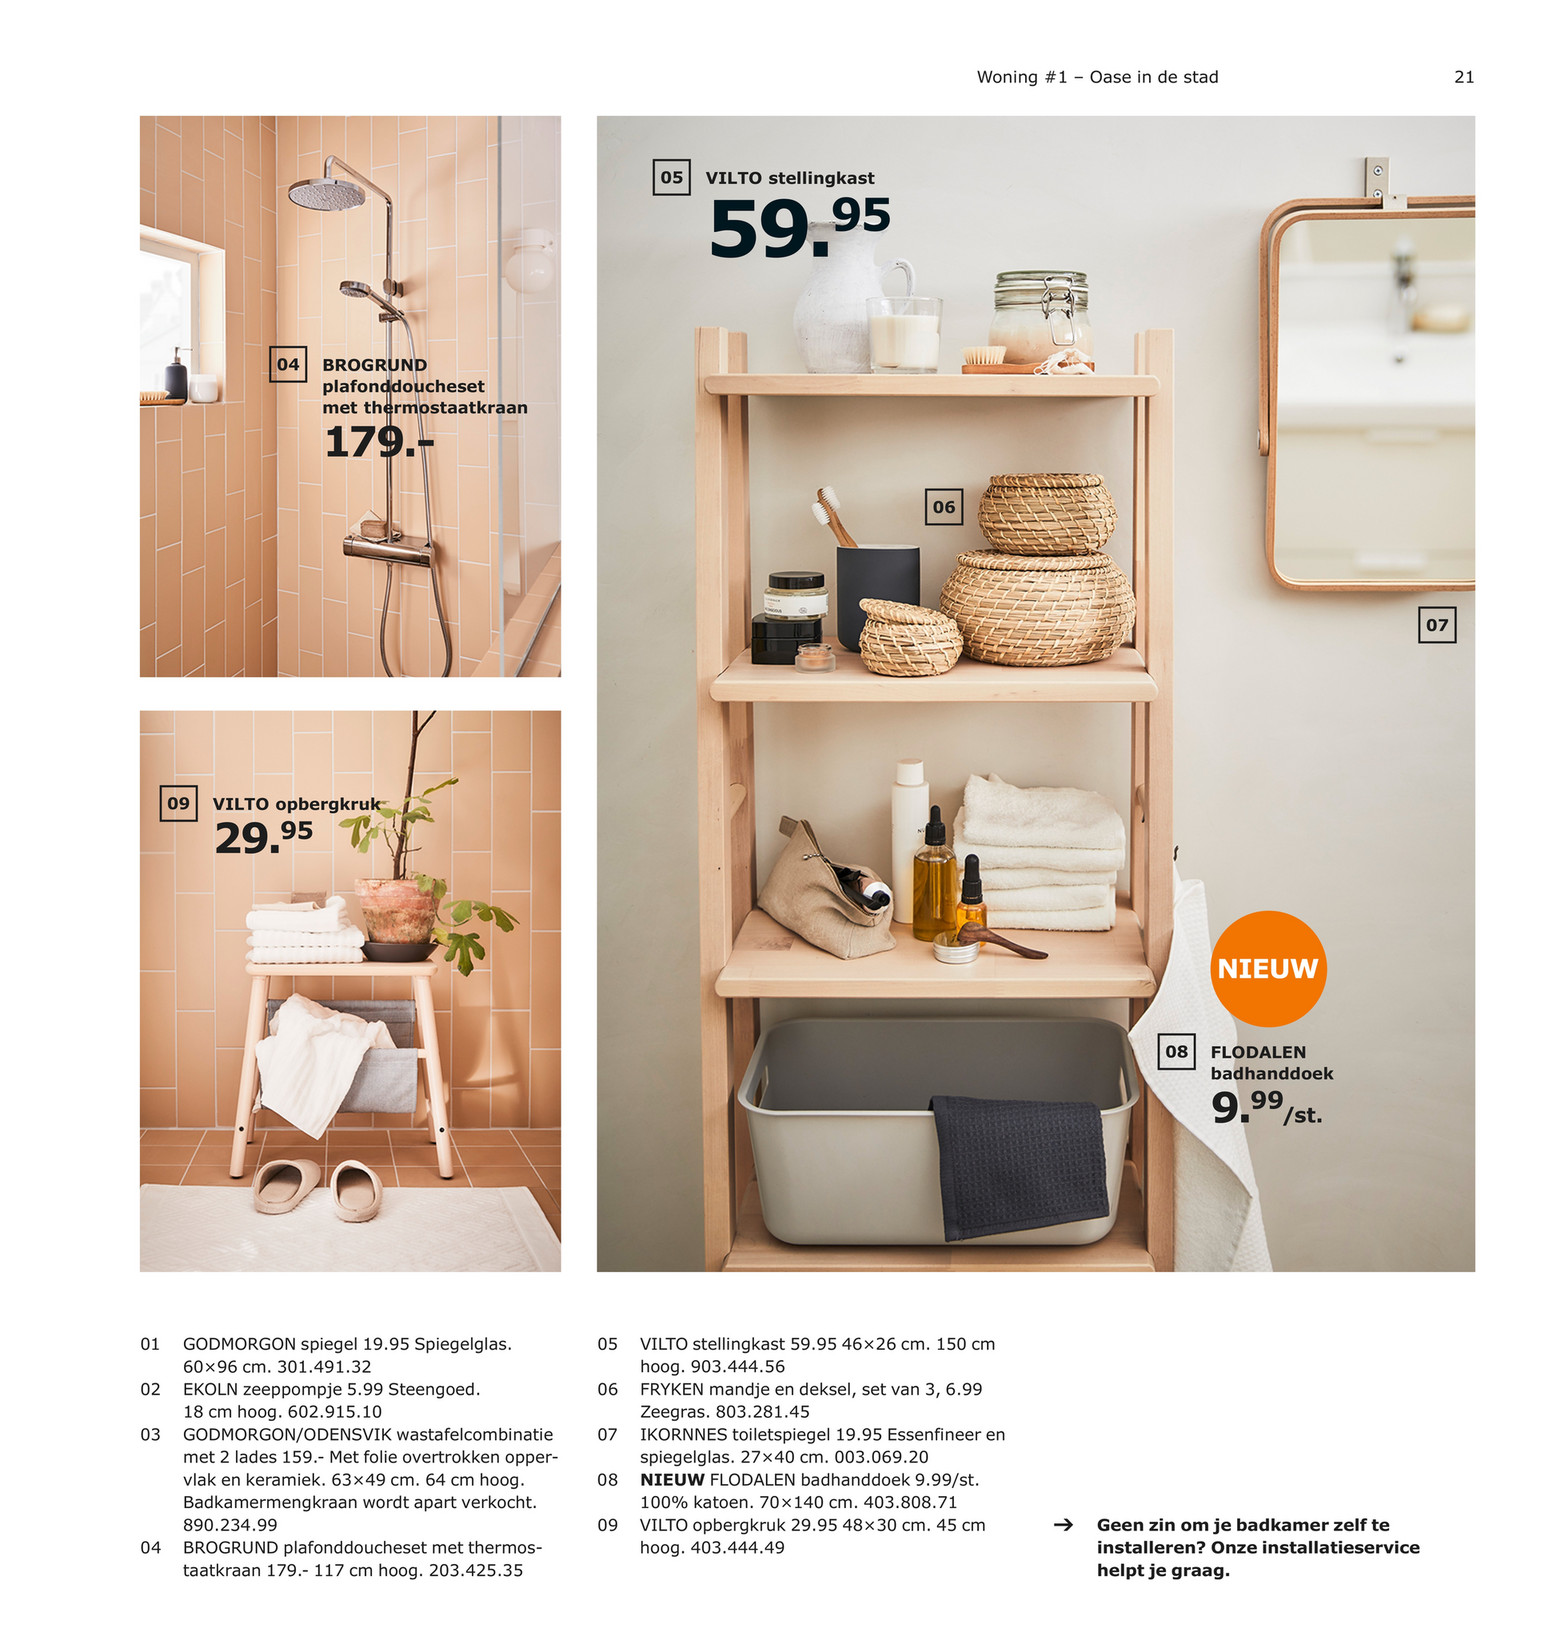 Anoi achter Europa Folderaanbiedingen - Ikea-catalogus_2018_2019 - Pagina 20-21